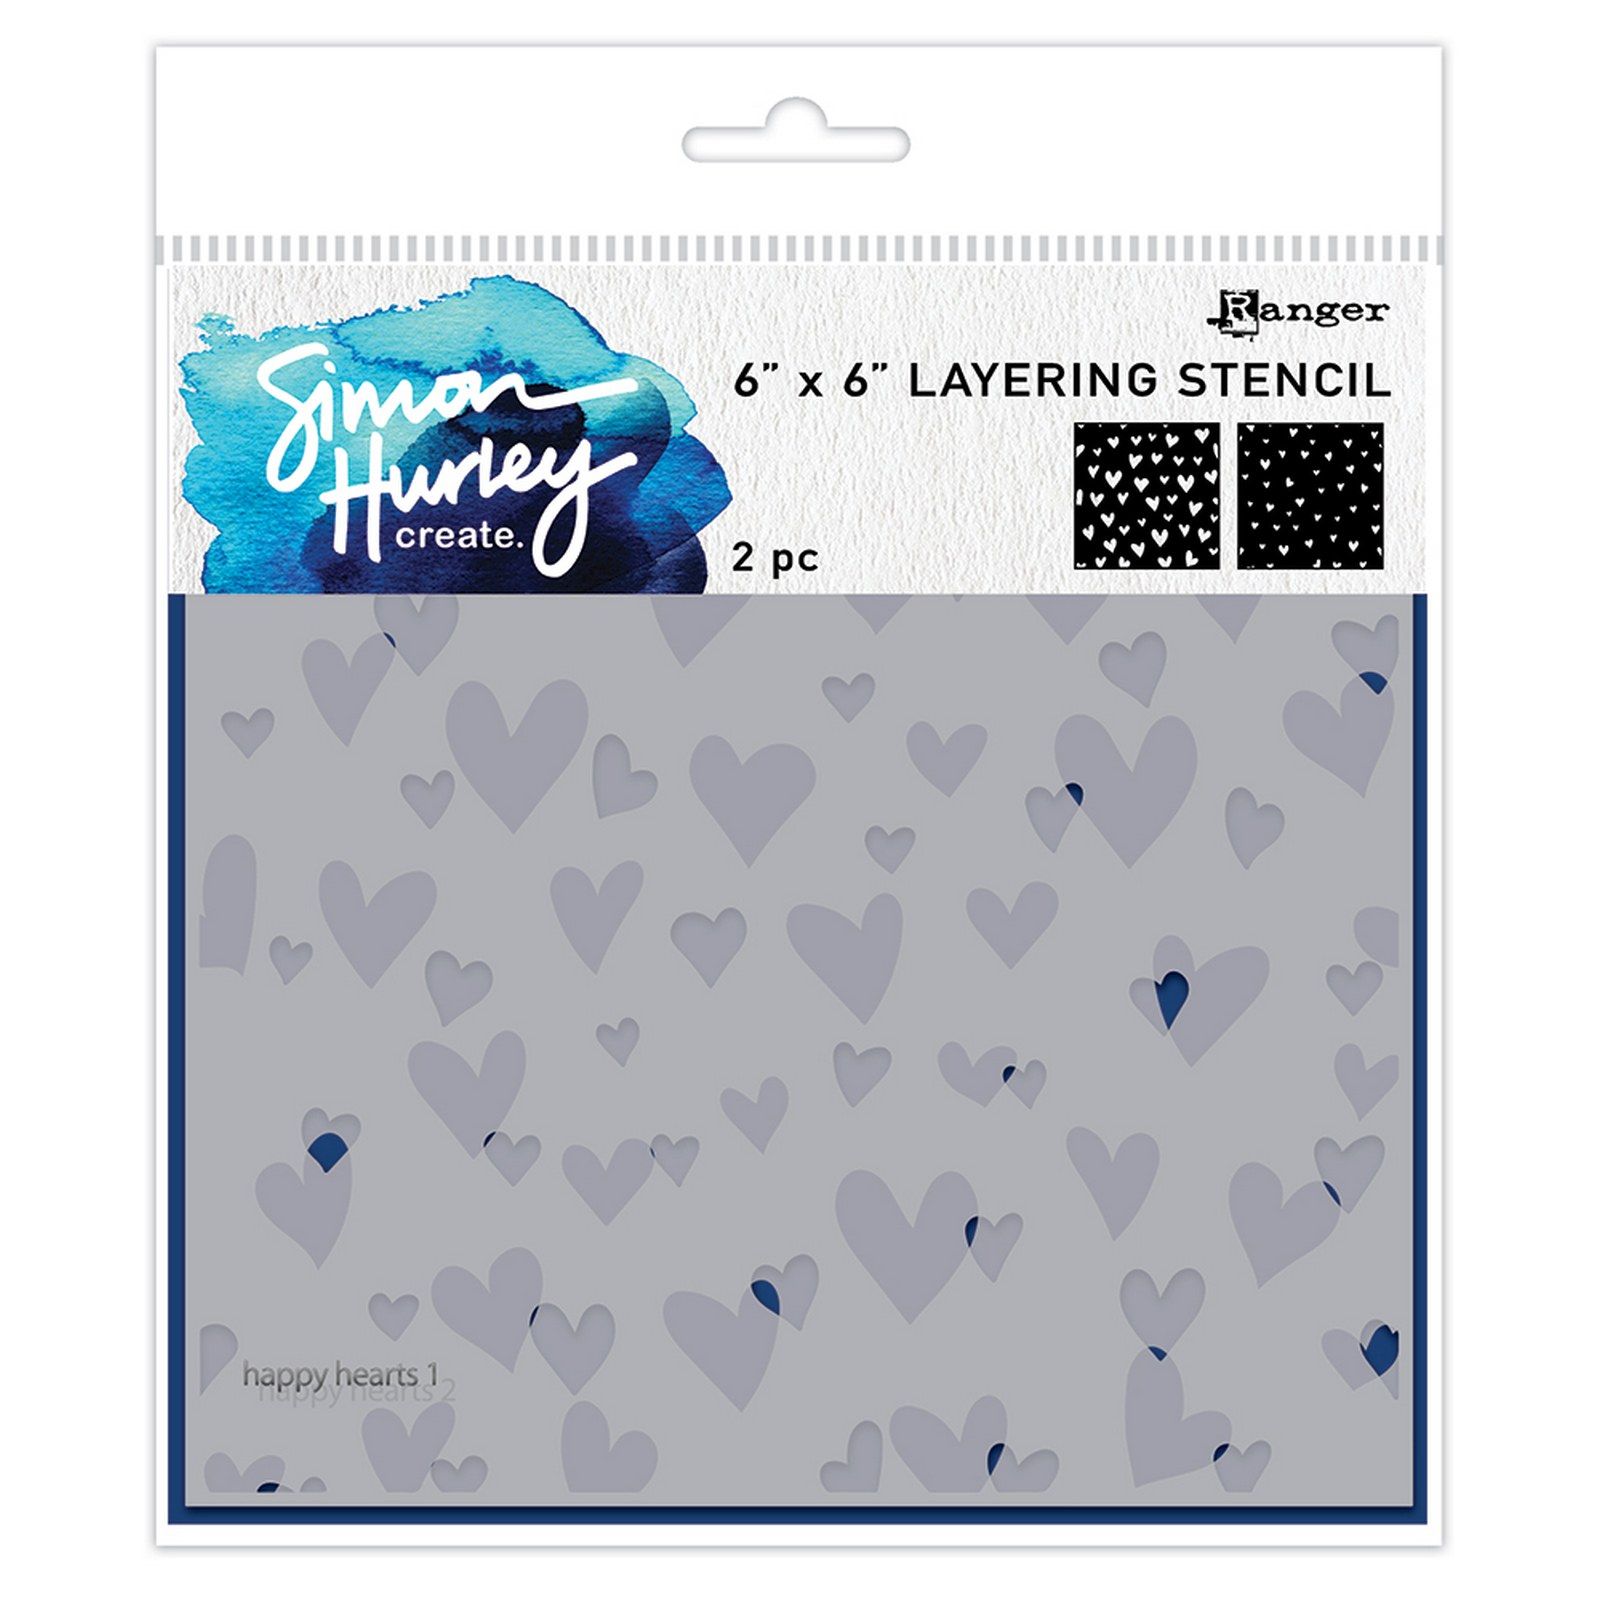 Ranger • Simon Hurley Create Layering Stencils Happy Hearts 2pcs